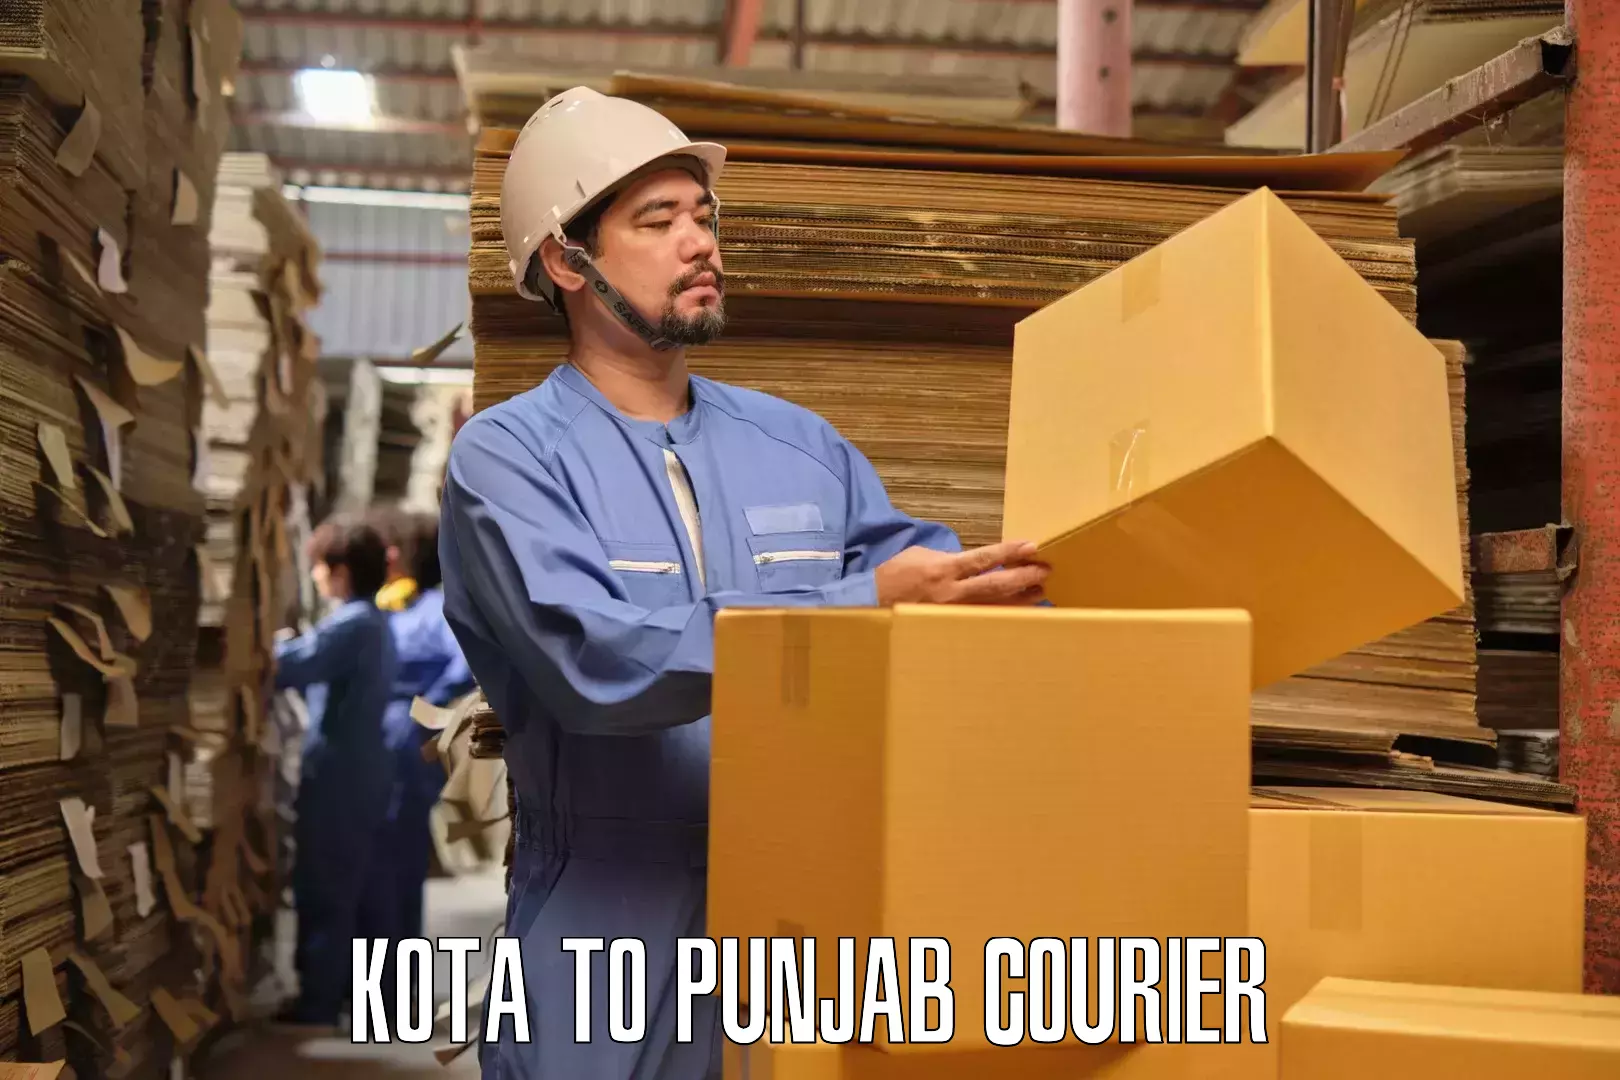 Efficient moving company Kota to Punjab